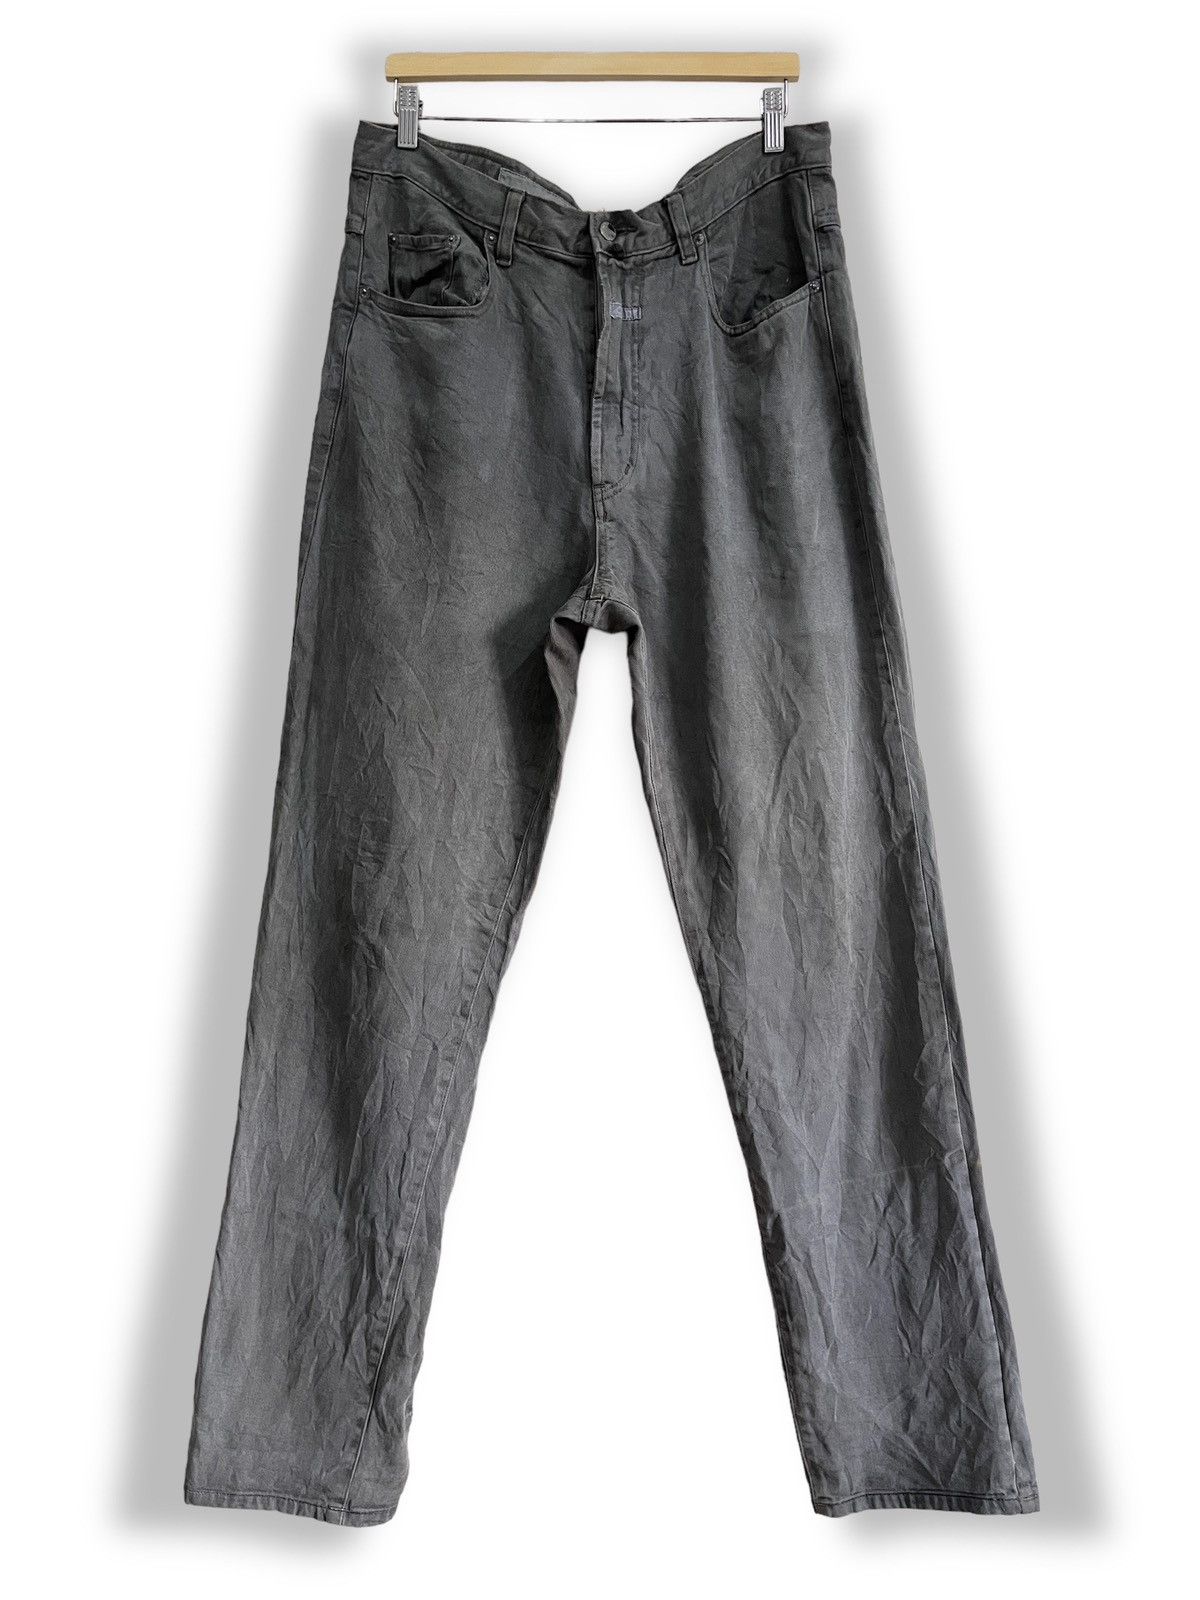 Vintage Marithe Francois Girbaud Distressed Denim Jeans - 1